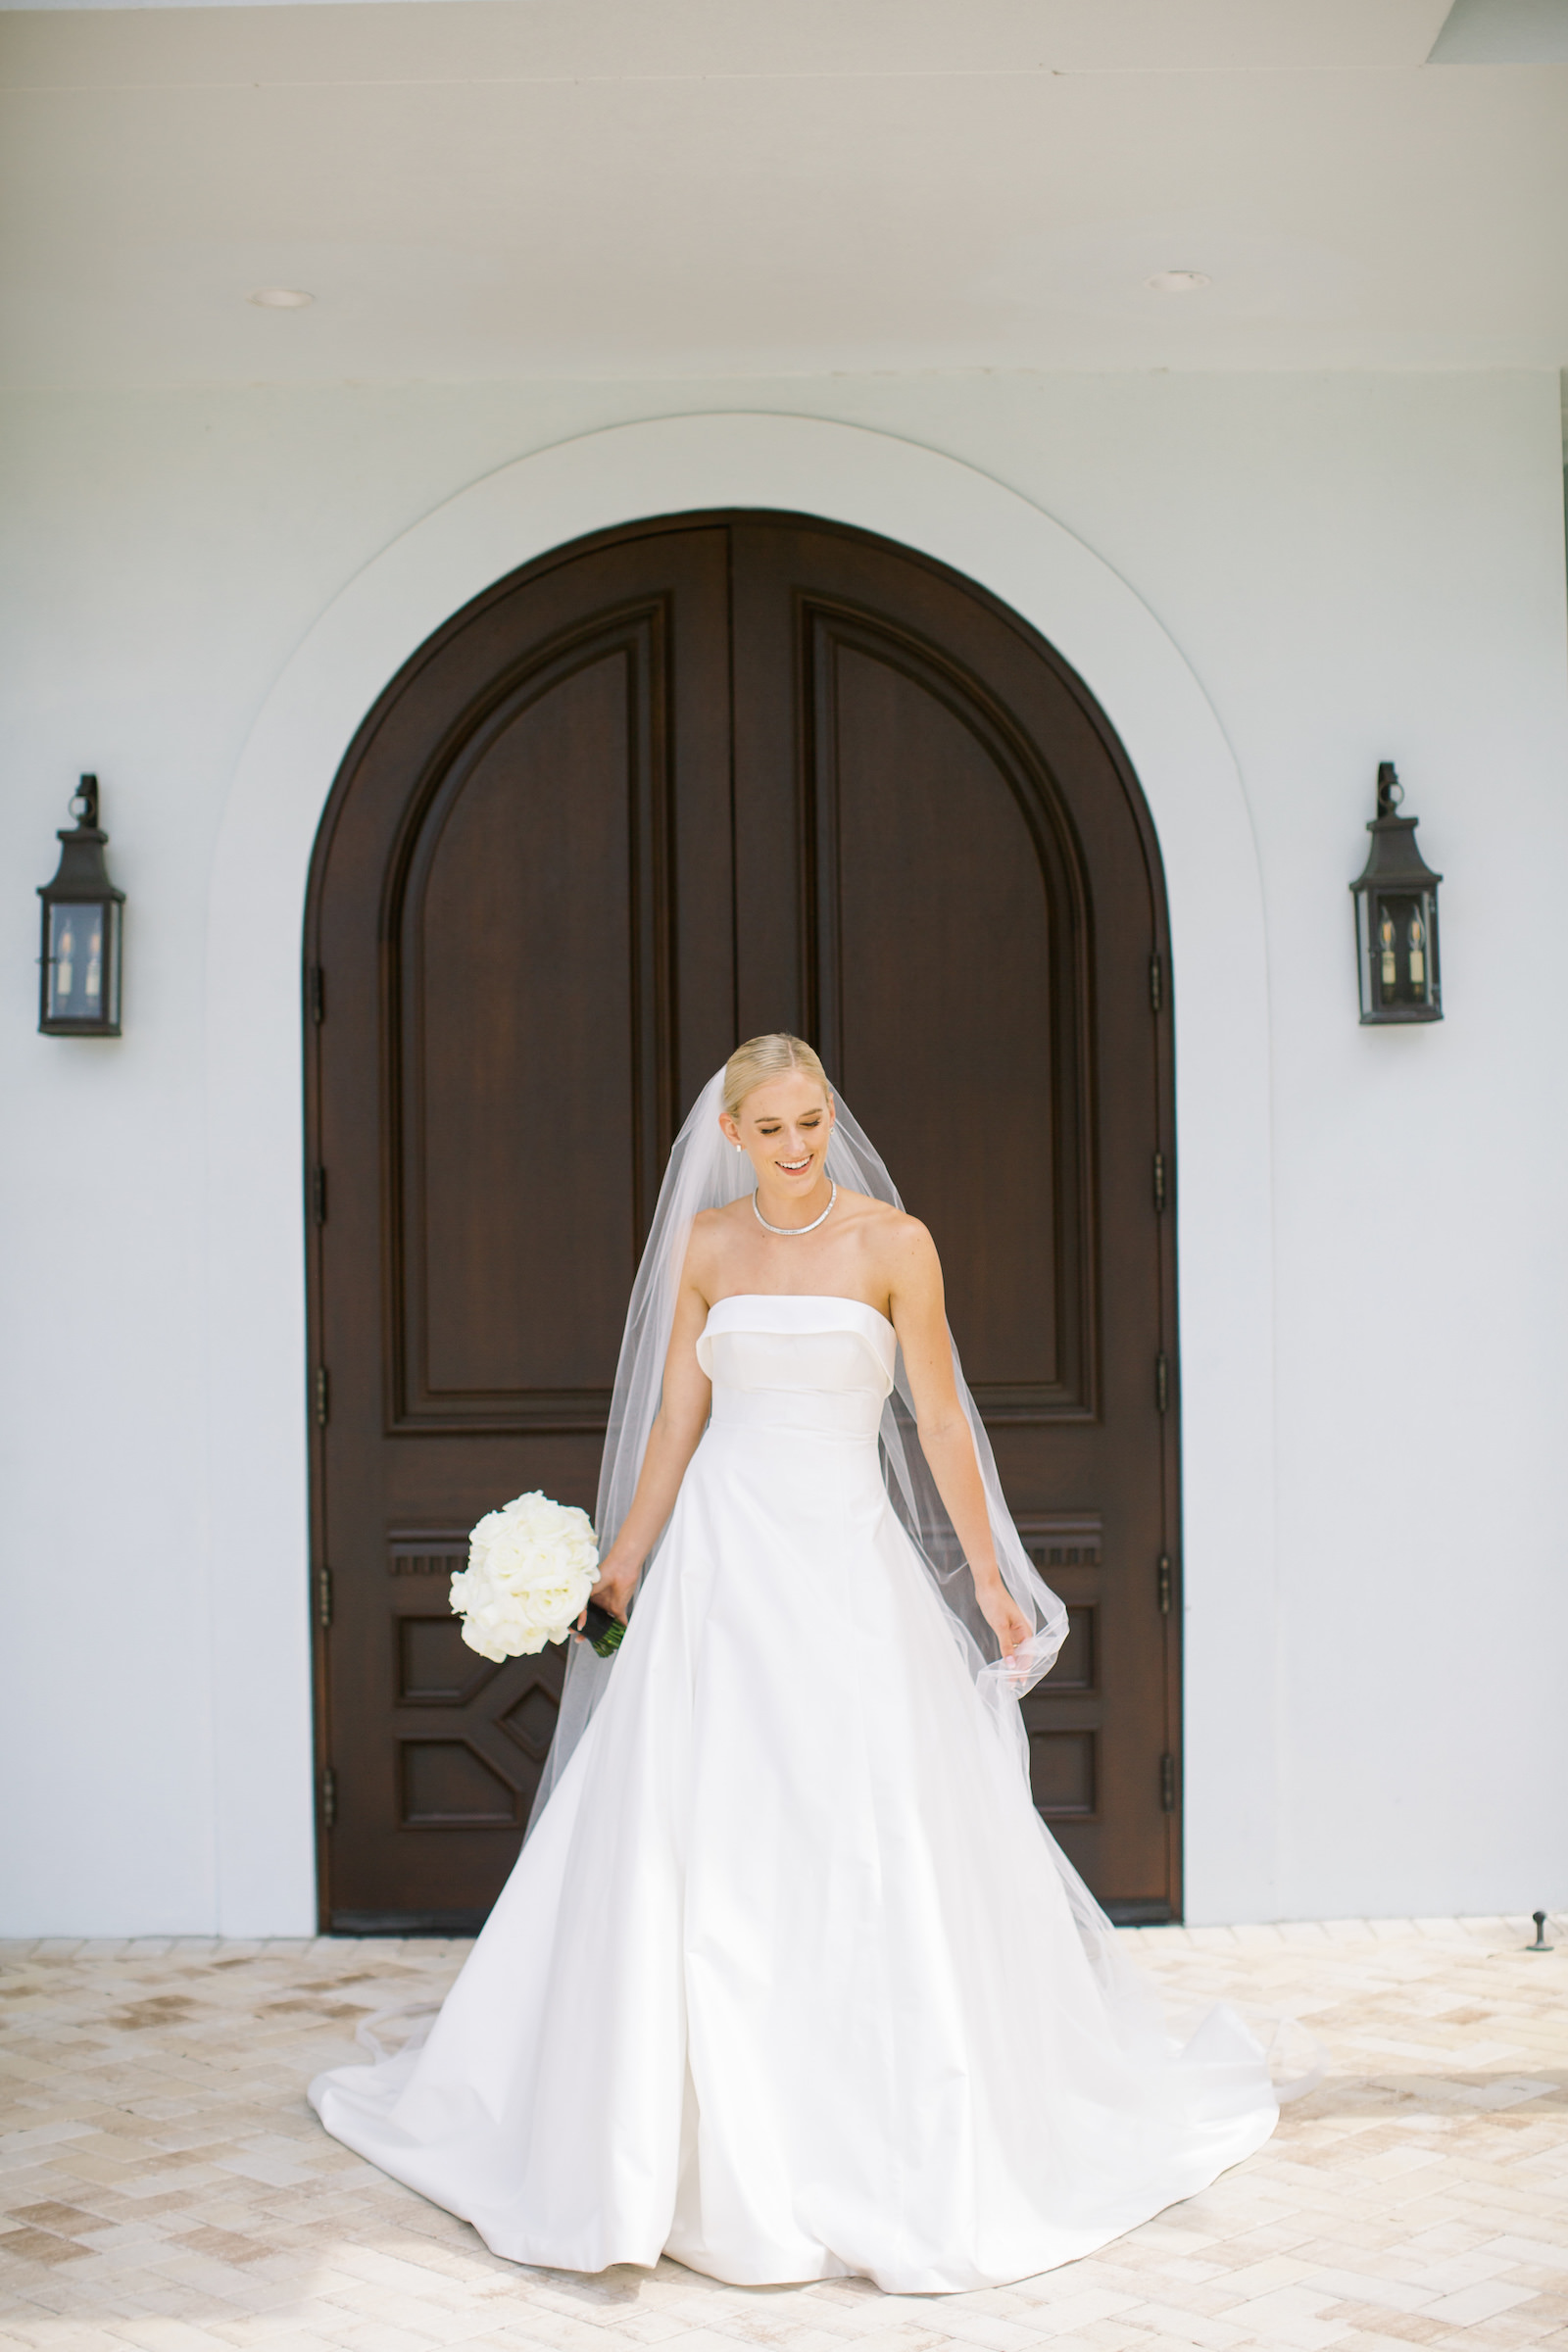 Classic Strapless A Line Wedding Dress Ideas | Tampa Bay Planner Parties A La Carte